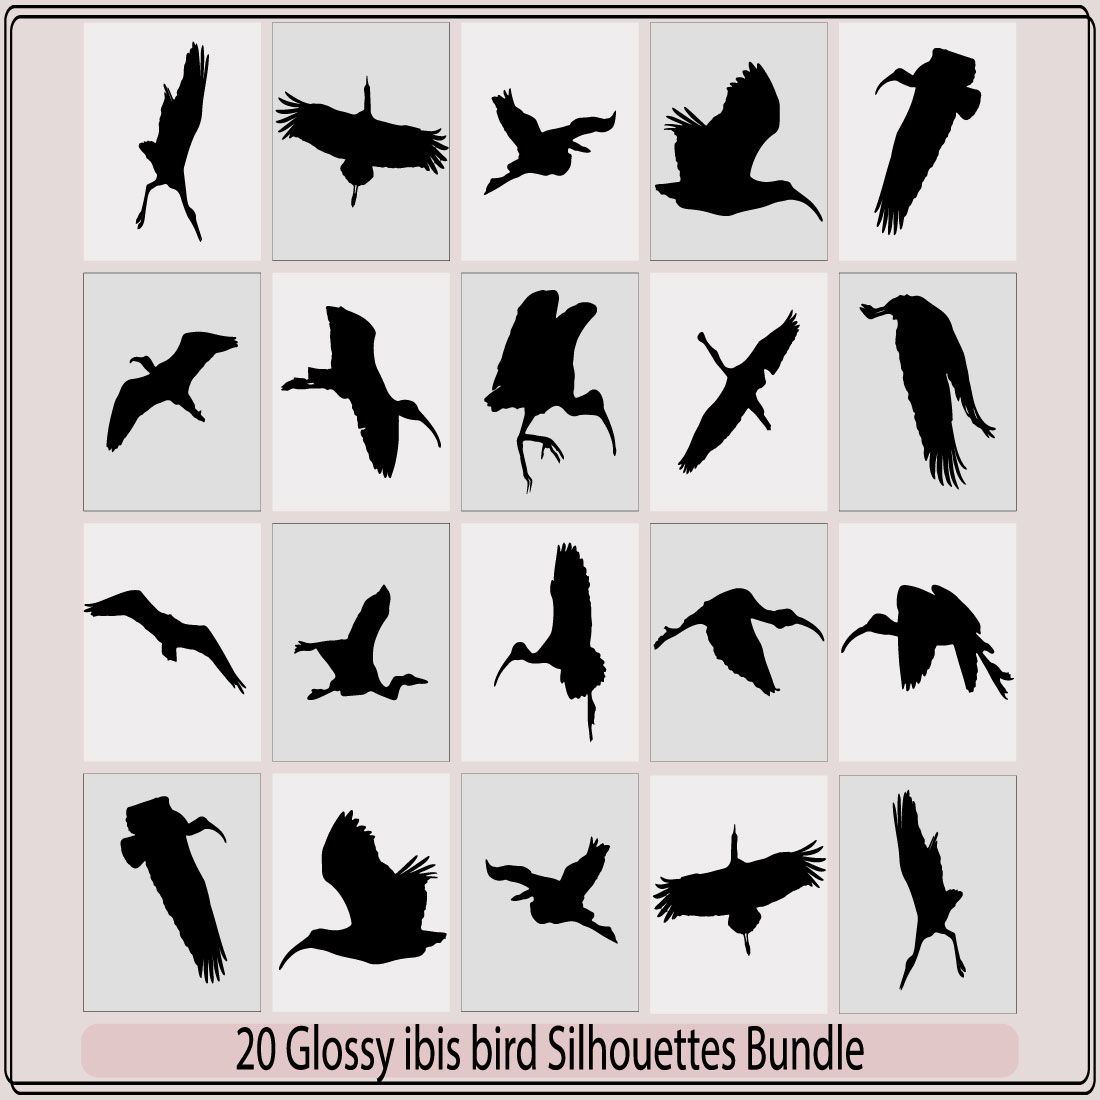 Glossy ibis bird silhouette,Glossy ibis bird silhouette bundle,Glossy ibis bird illustration,Glossy ibis bird vector, preview image.